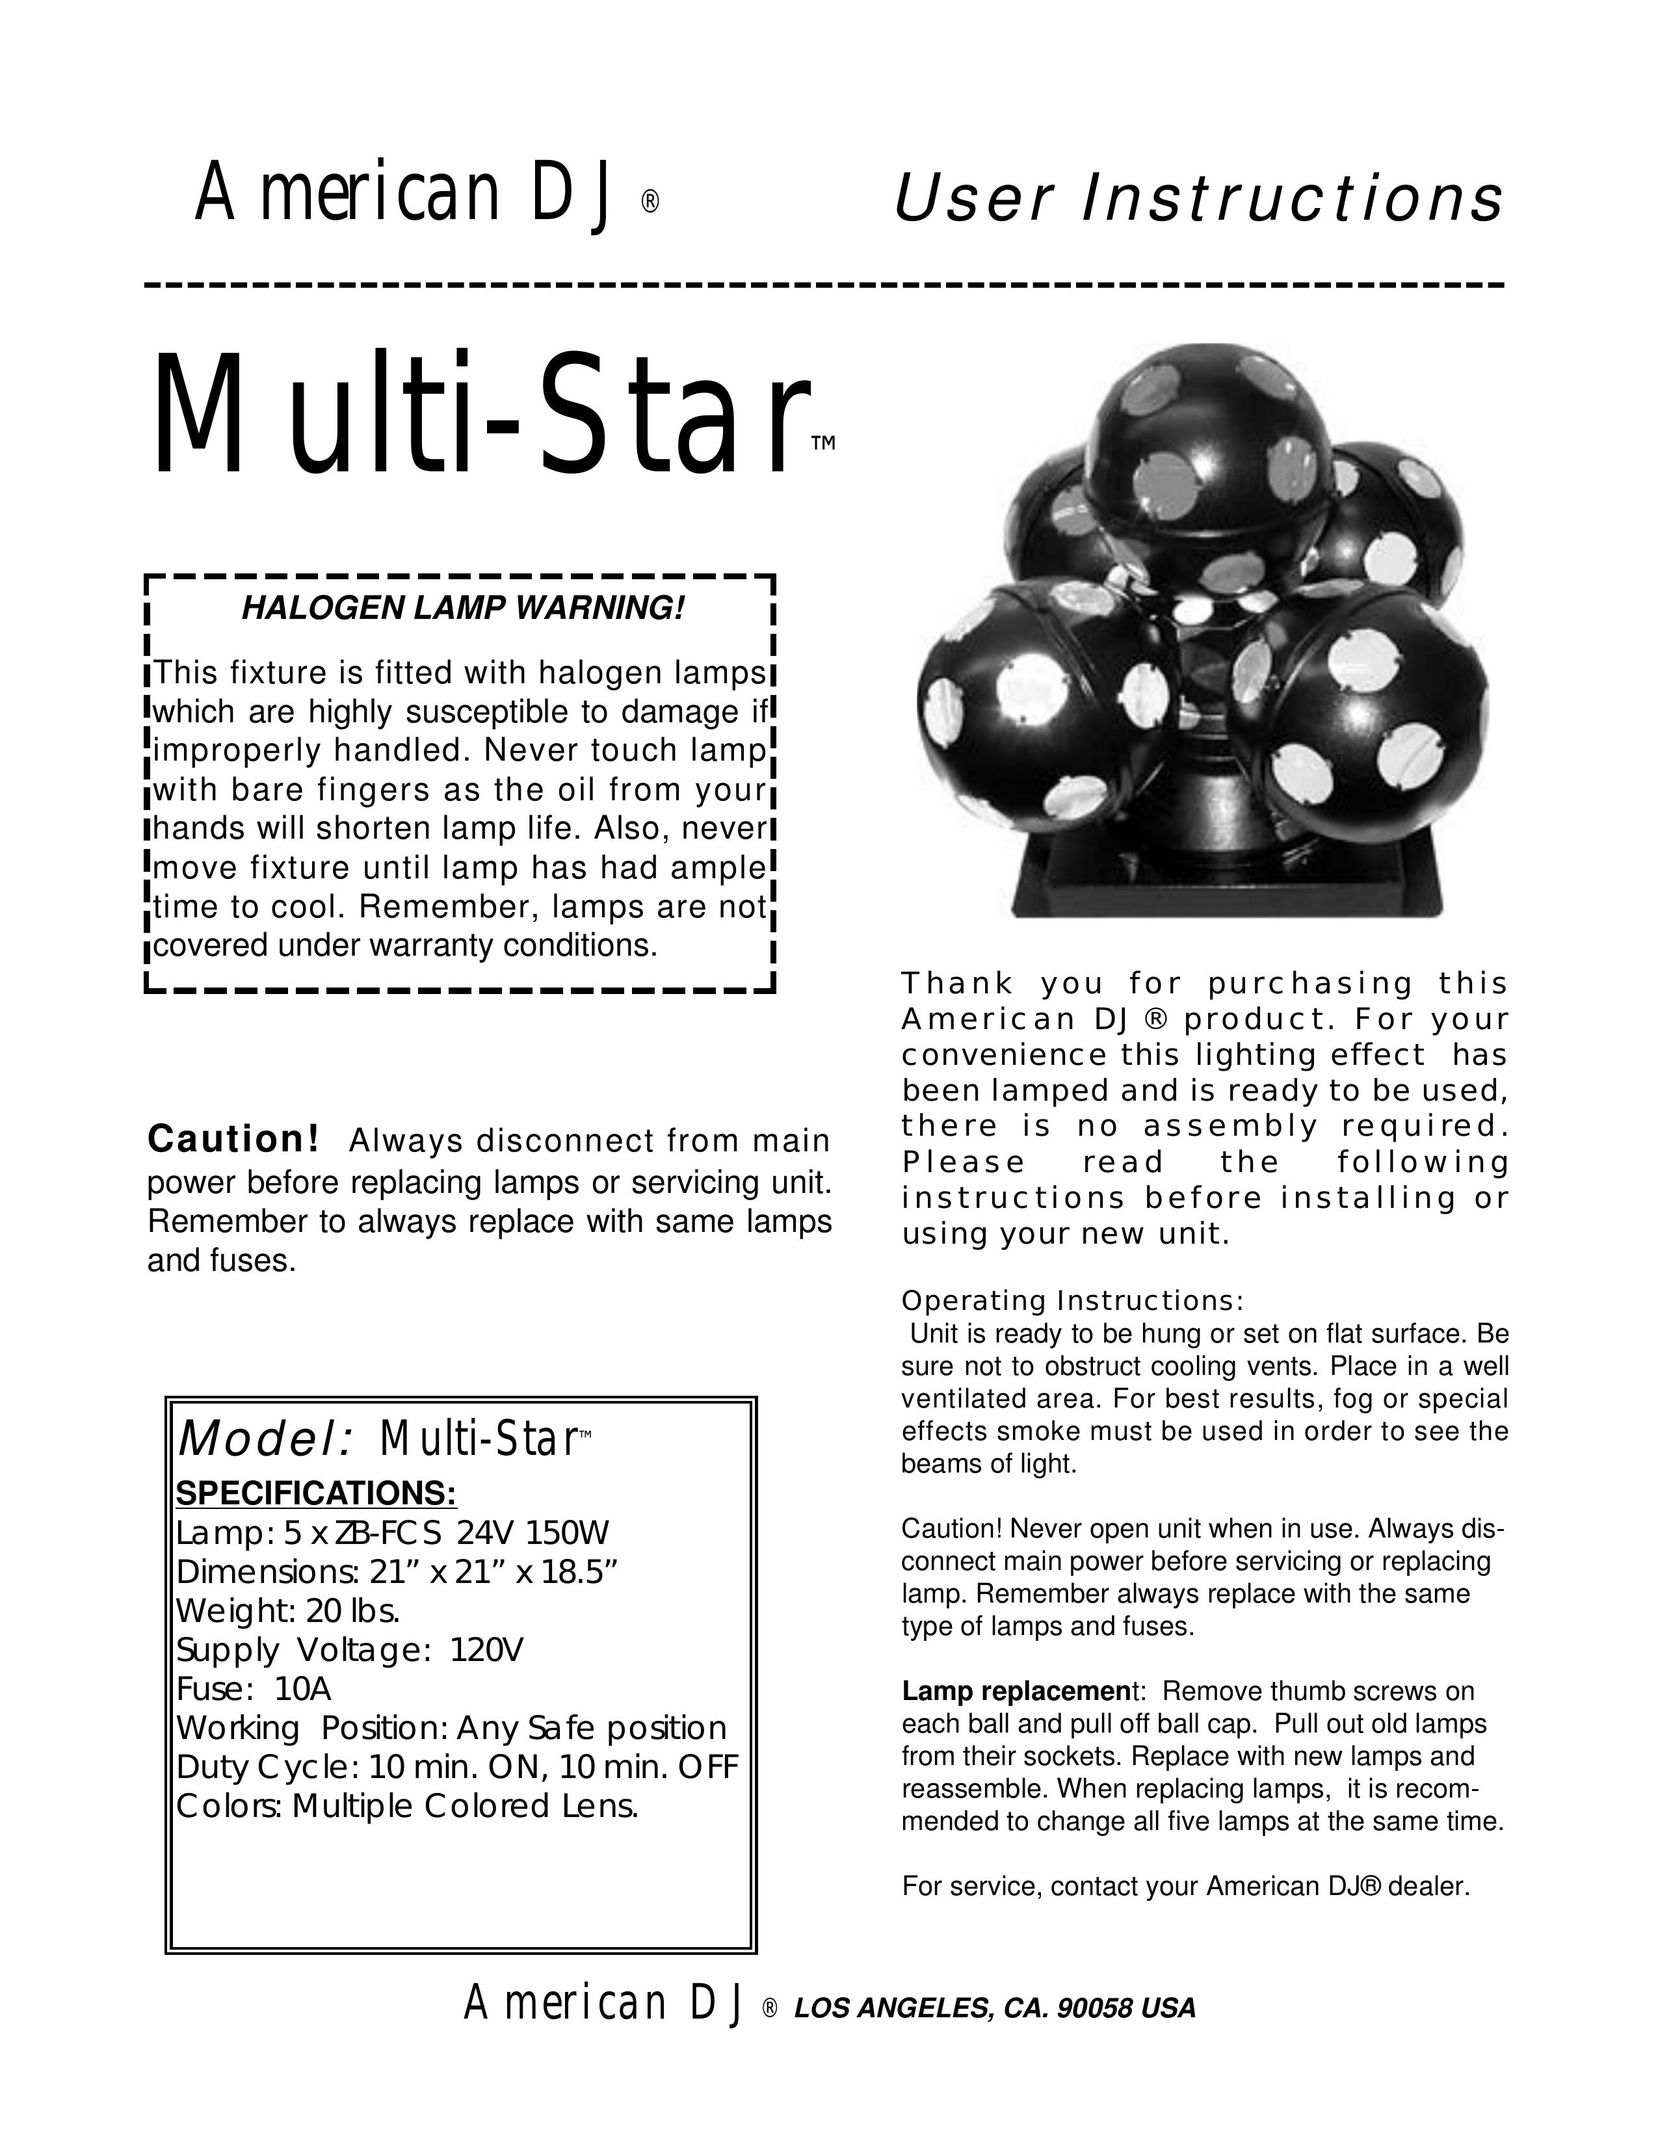 American DJ Multi-Star Indoor Furnishings User Manual